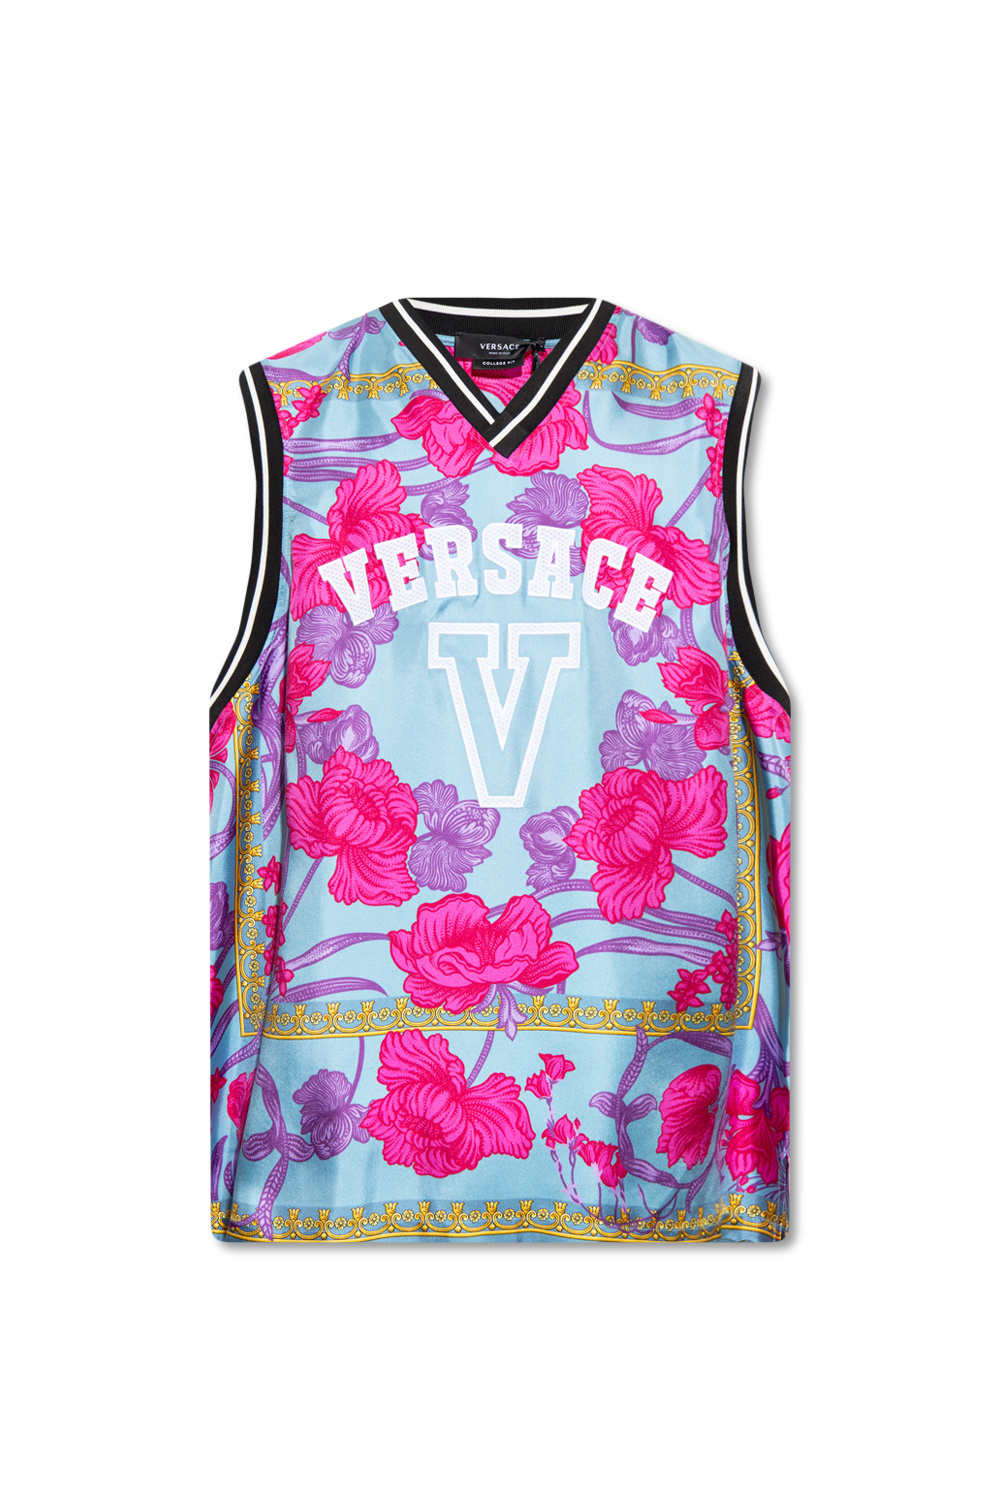 Versace Just Cavalli crew neck logo printed sweatshirt